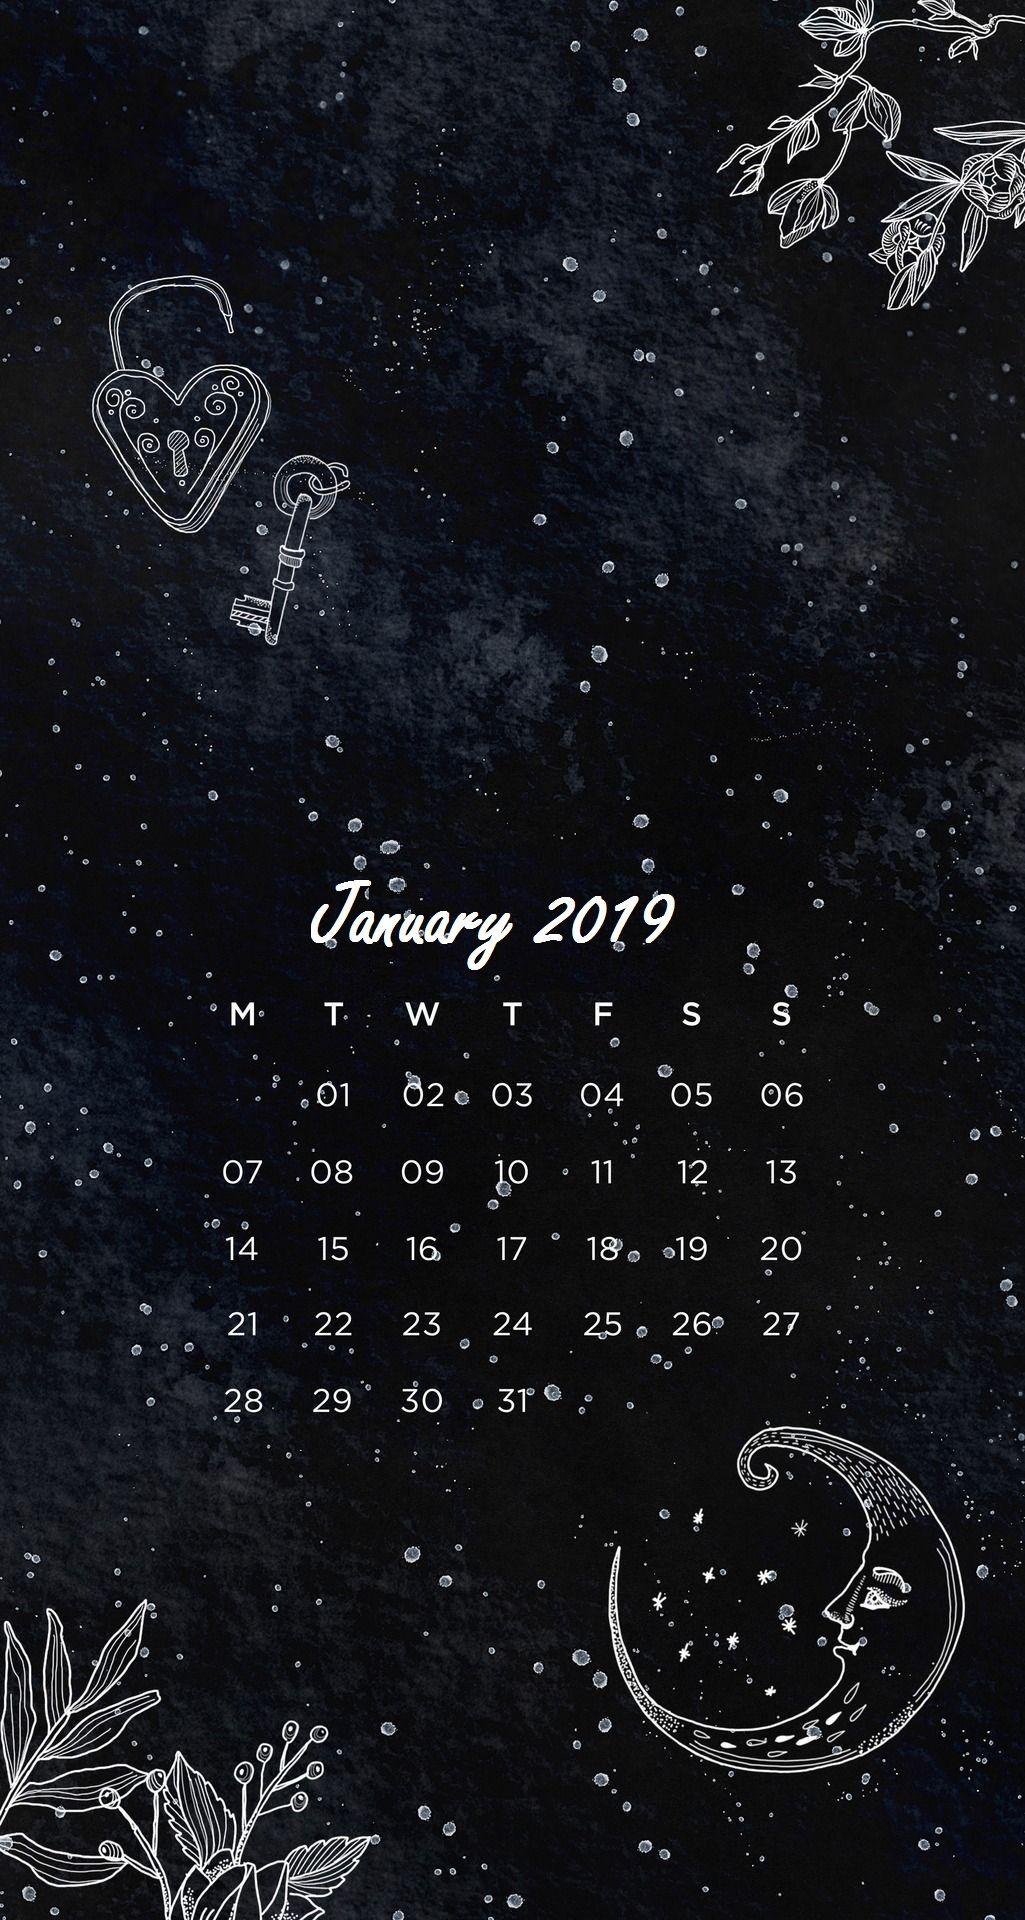 January 2019 iPhone Calendar Wallpaper